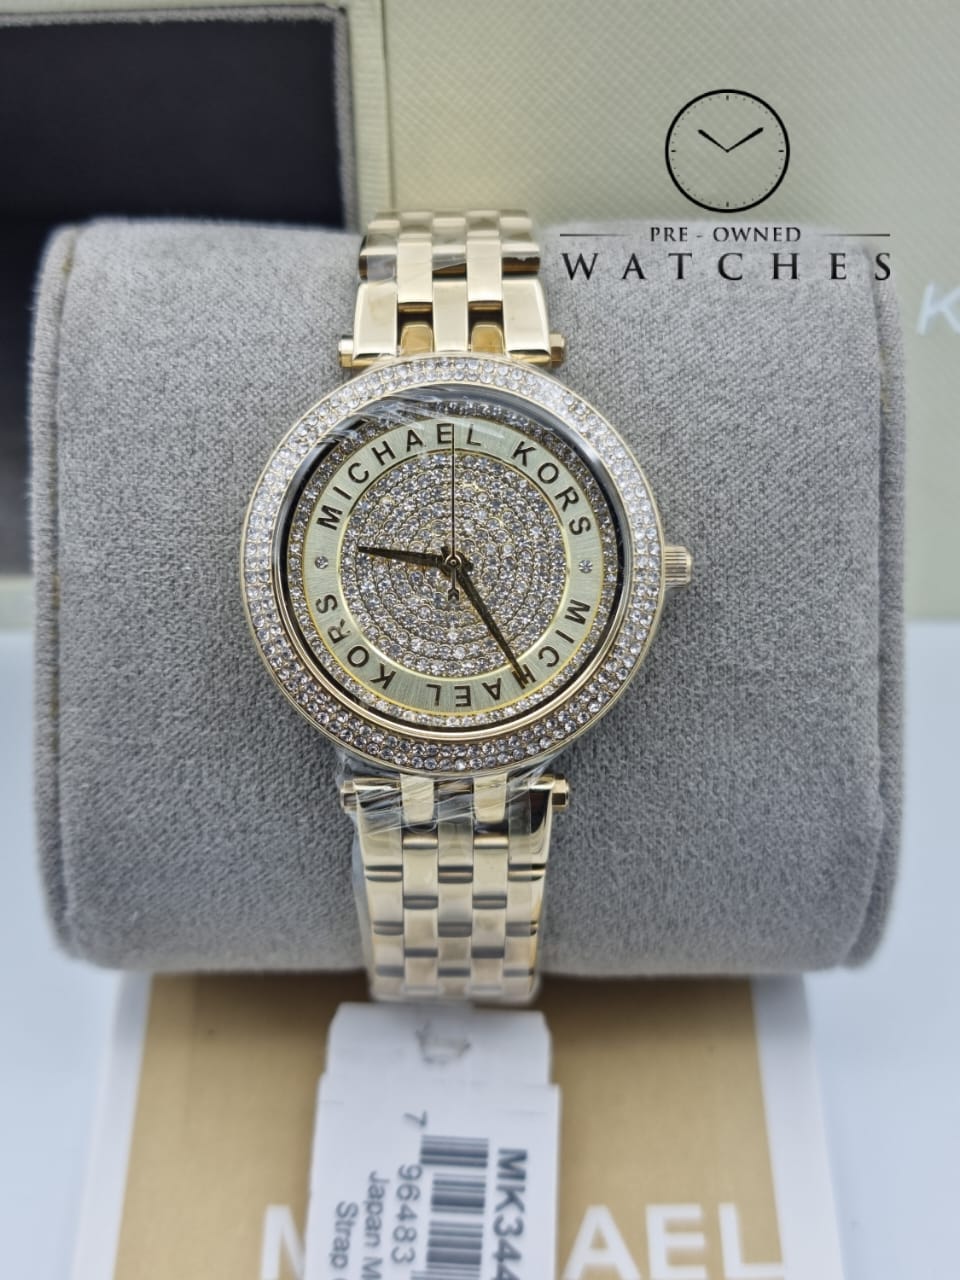 Michael Kors Women's Mini Darci Gold-Tone Watch MK3445